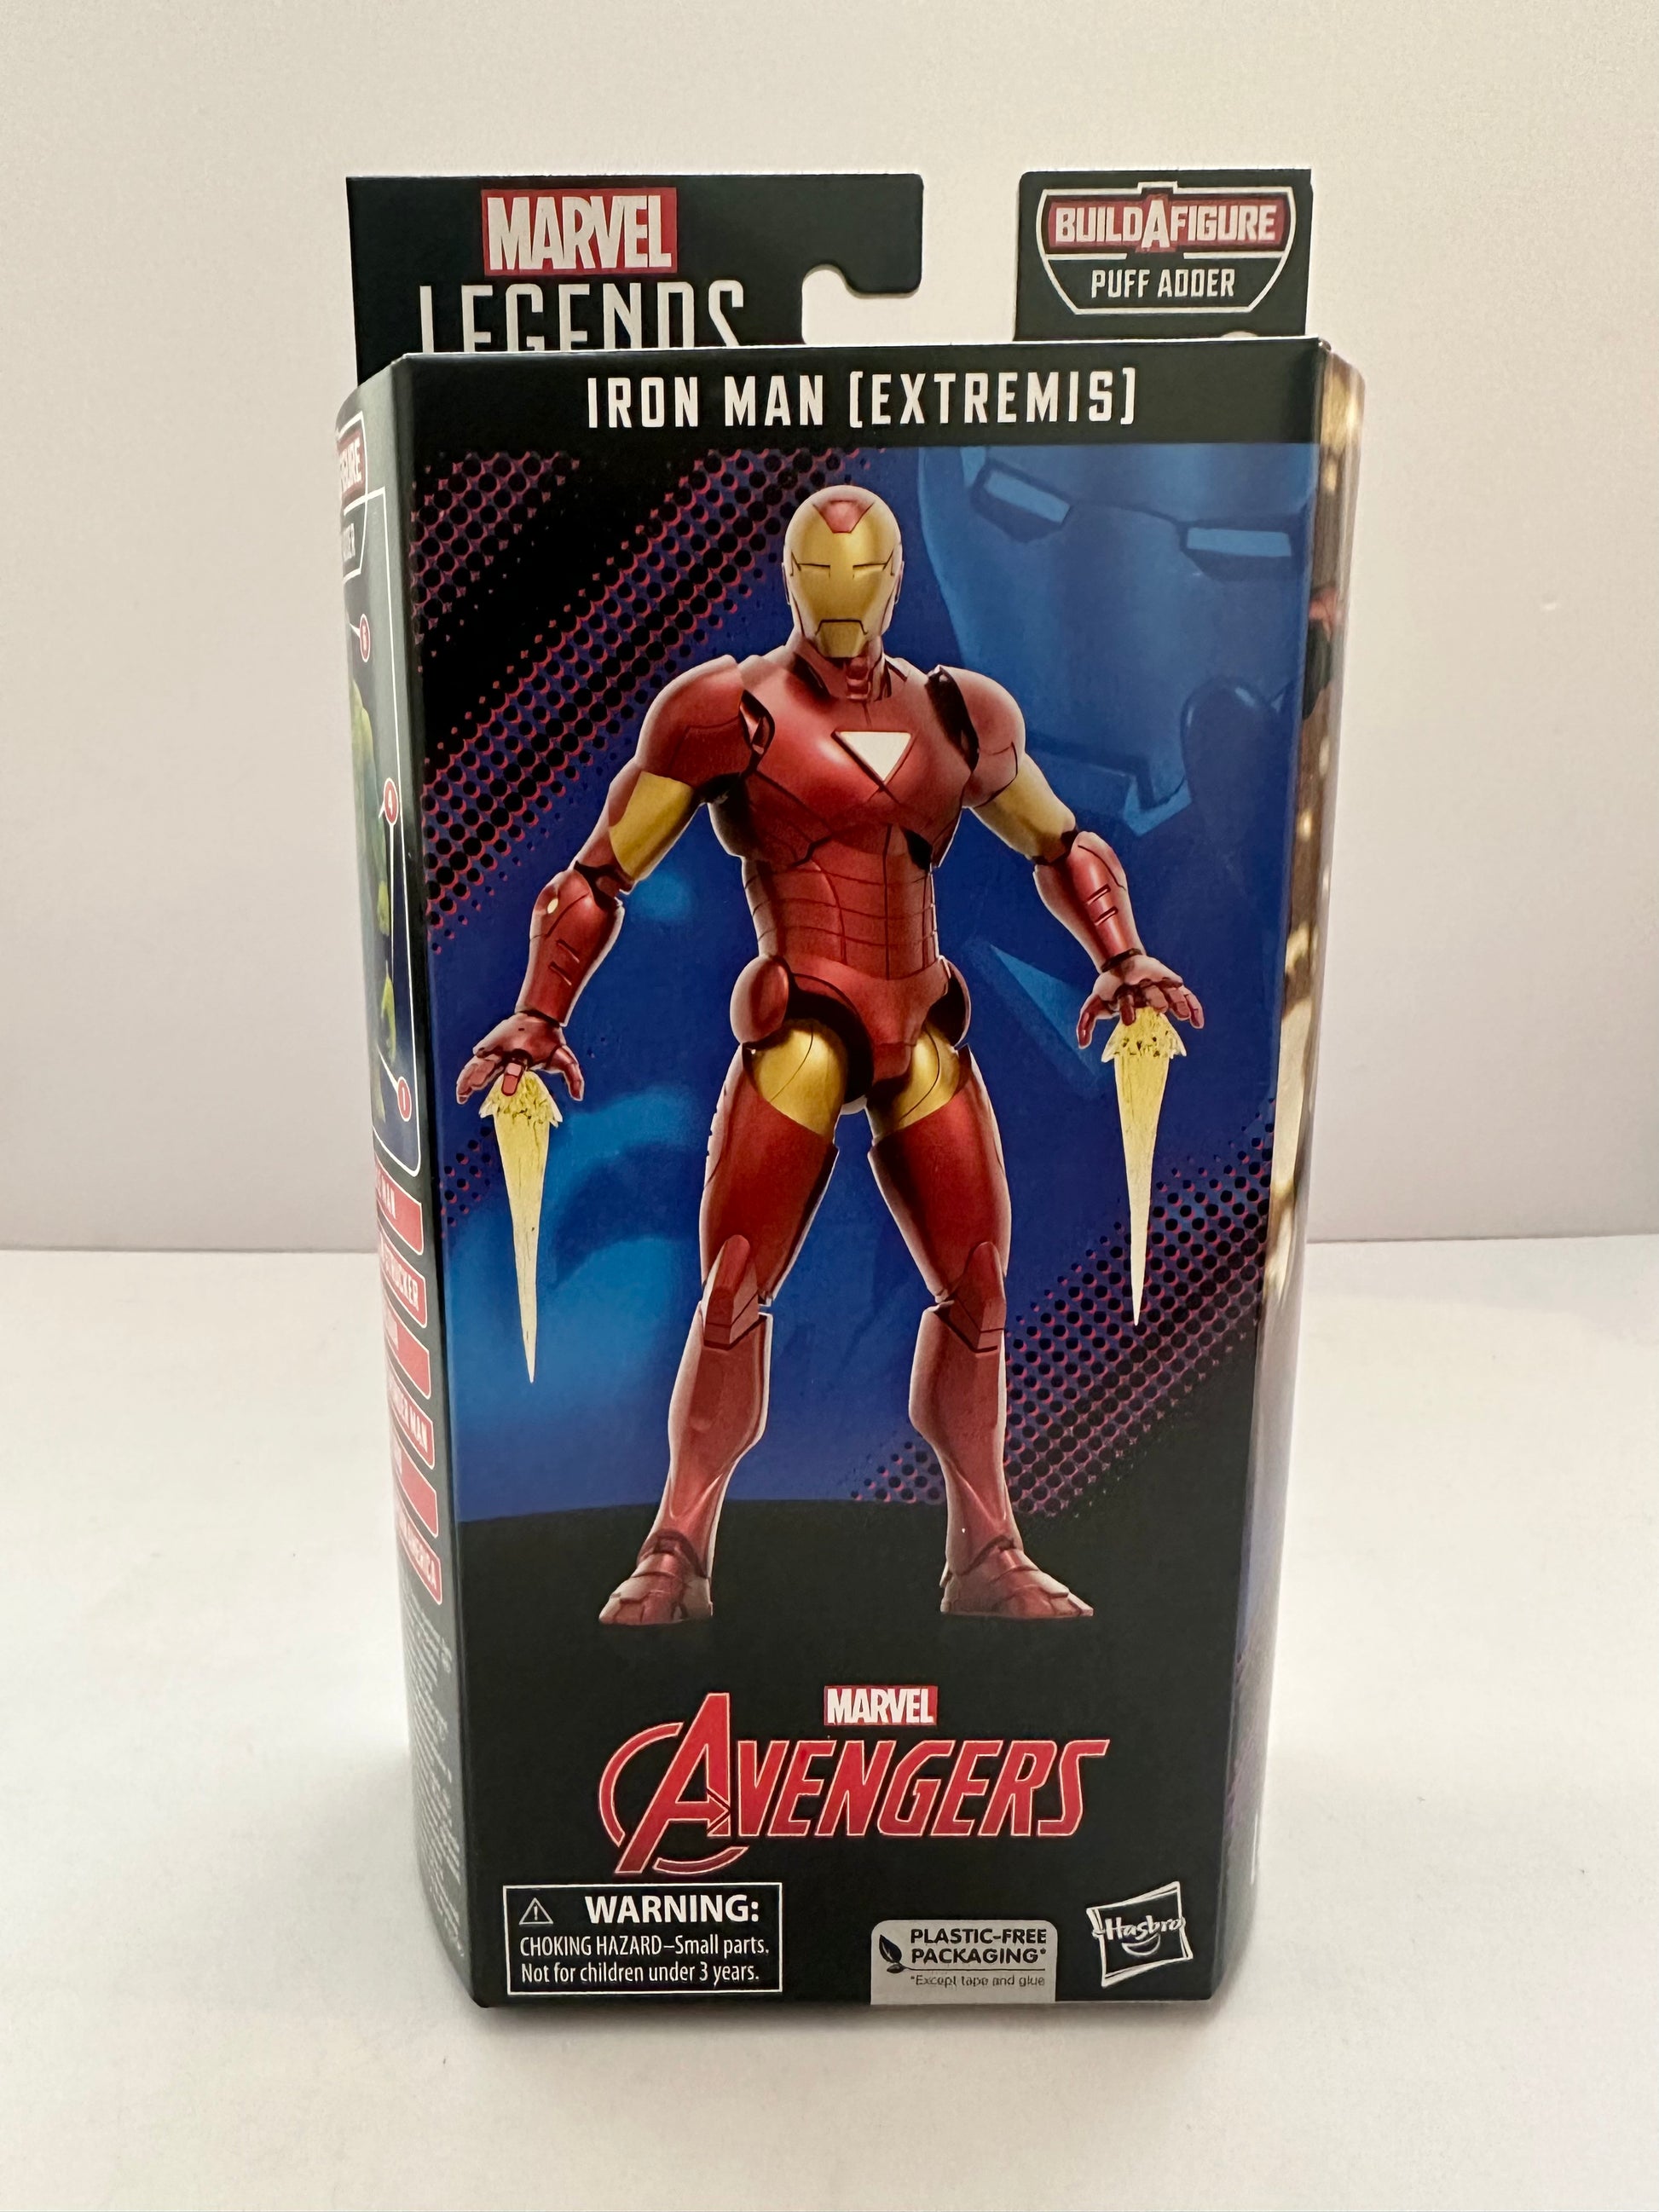 Marvel Legends - Iron Man (Extremis), Avengers Action Figure